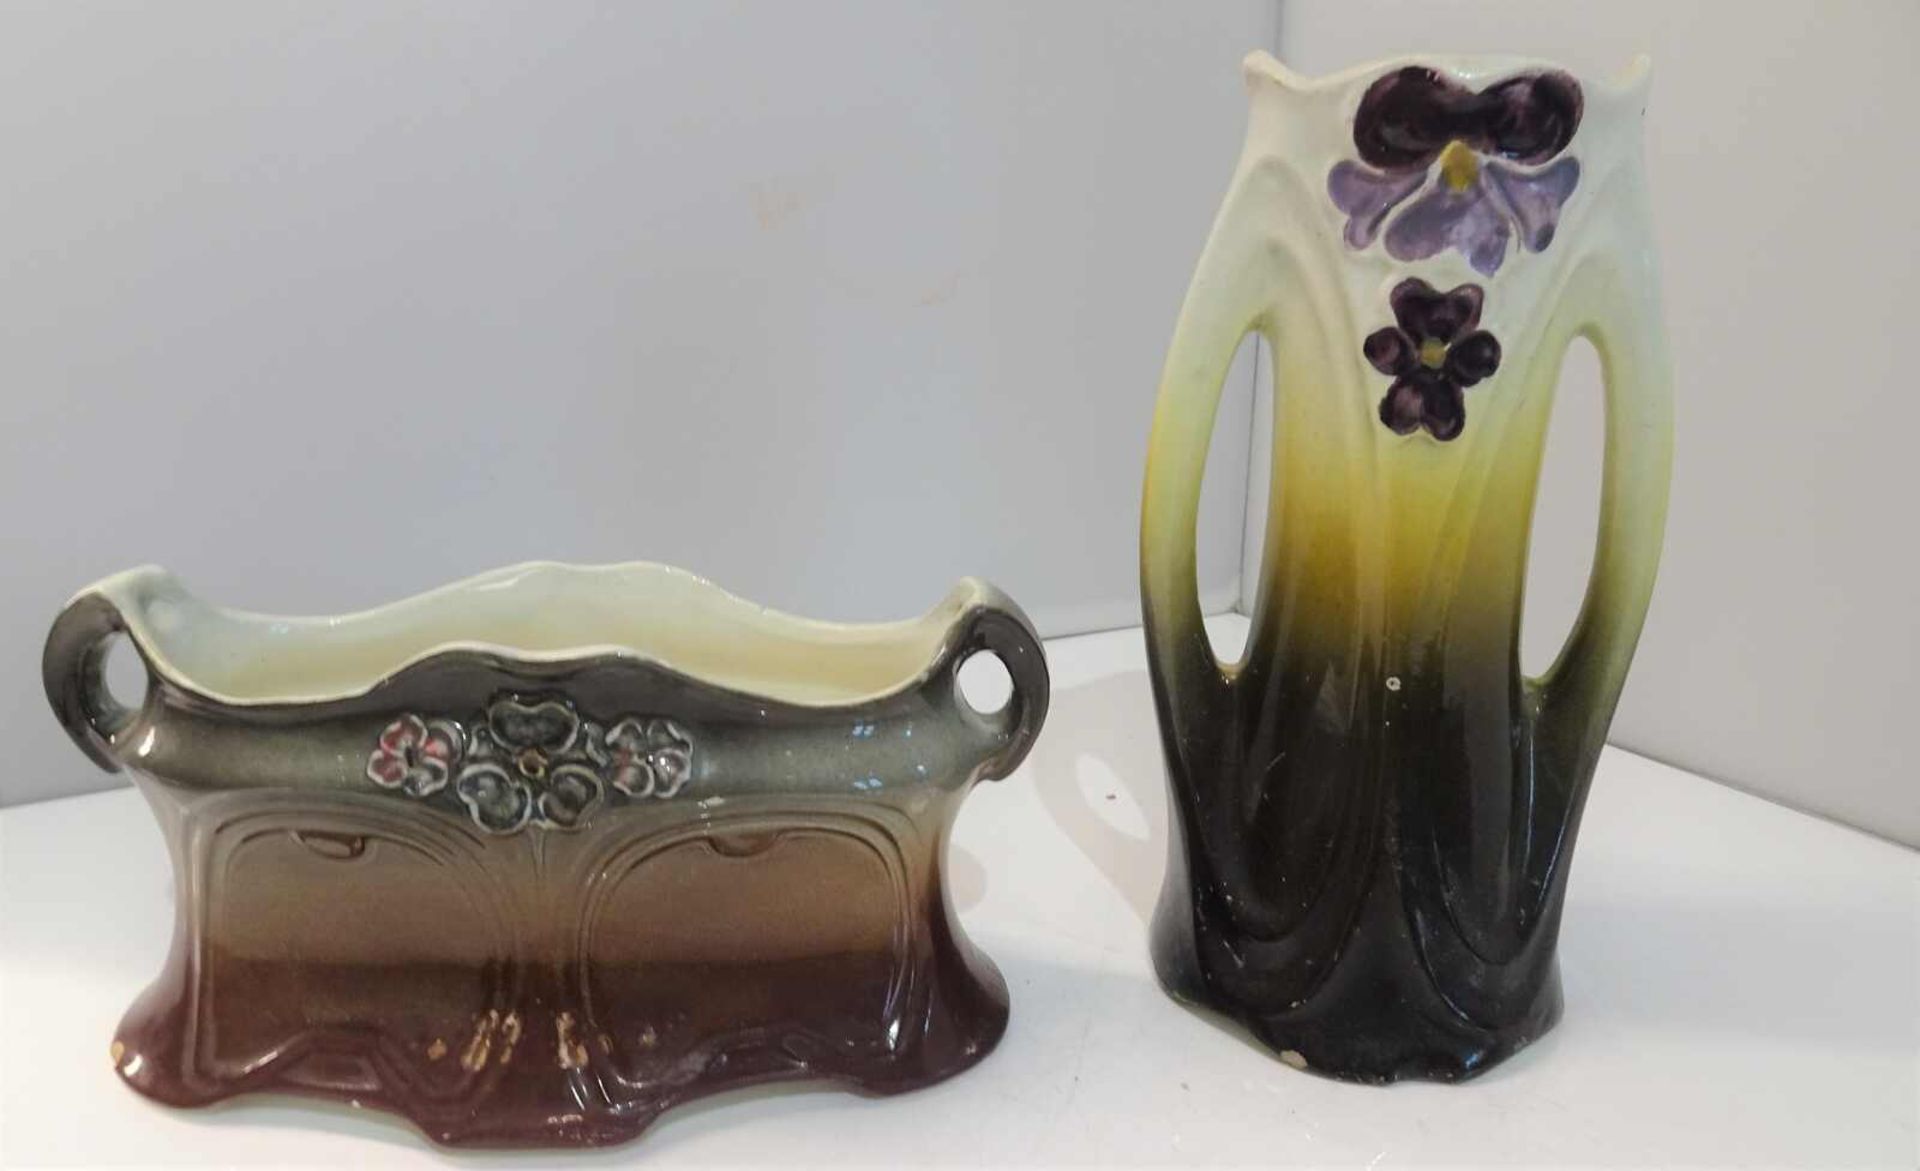 2 Teile Jugendstil Keramik, teilweise bestoßen.2 pieces of Art Nouveau ceramics, partly bumped.